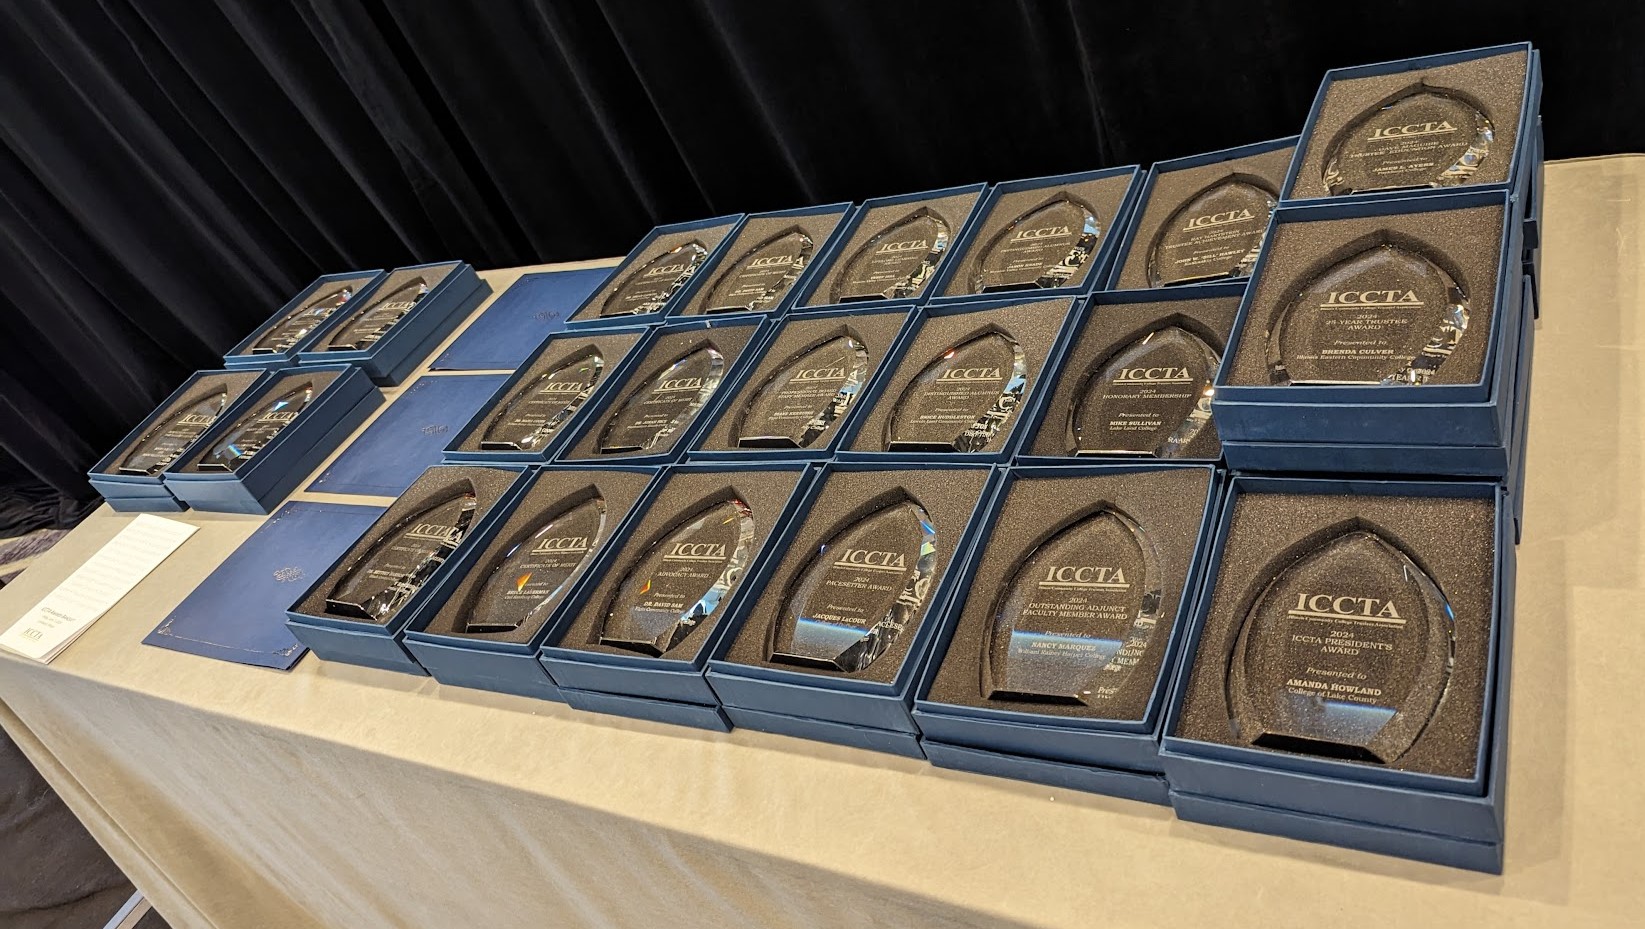 ICCTA award trophies